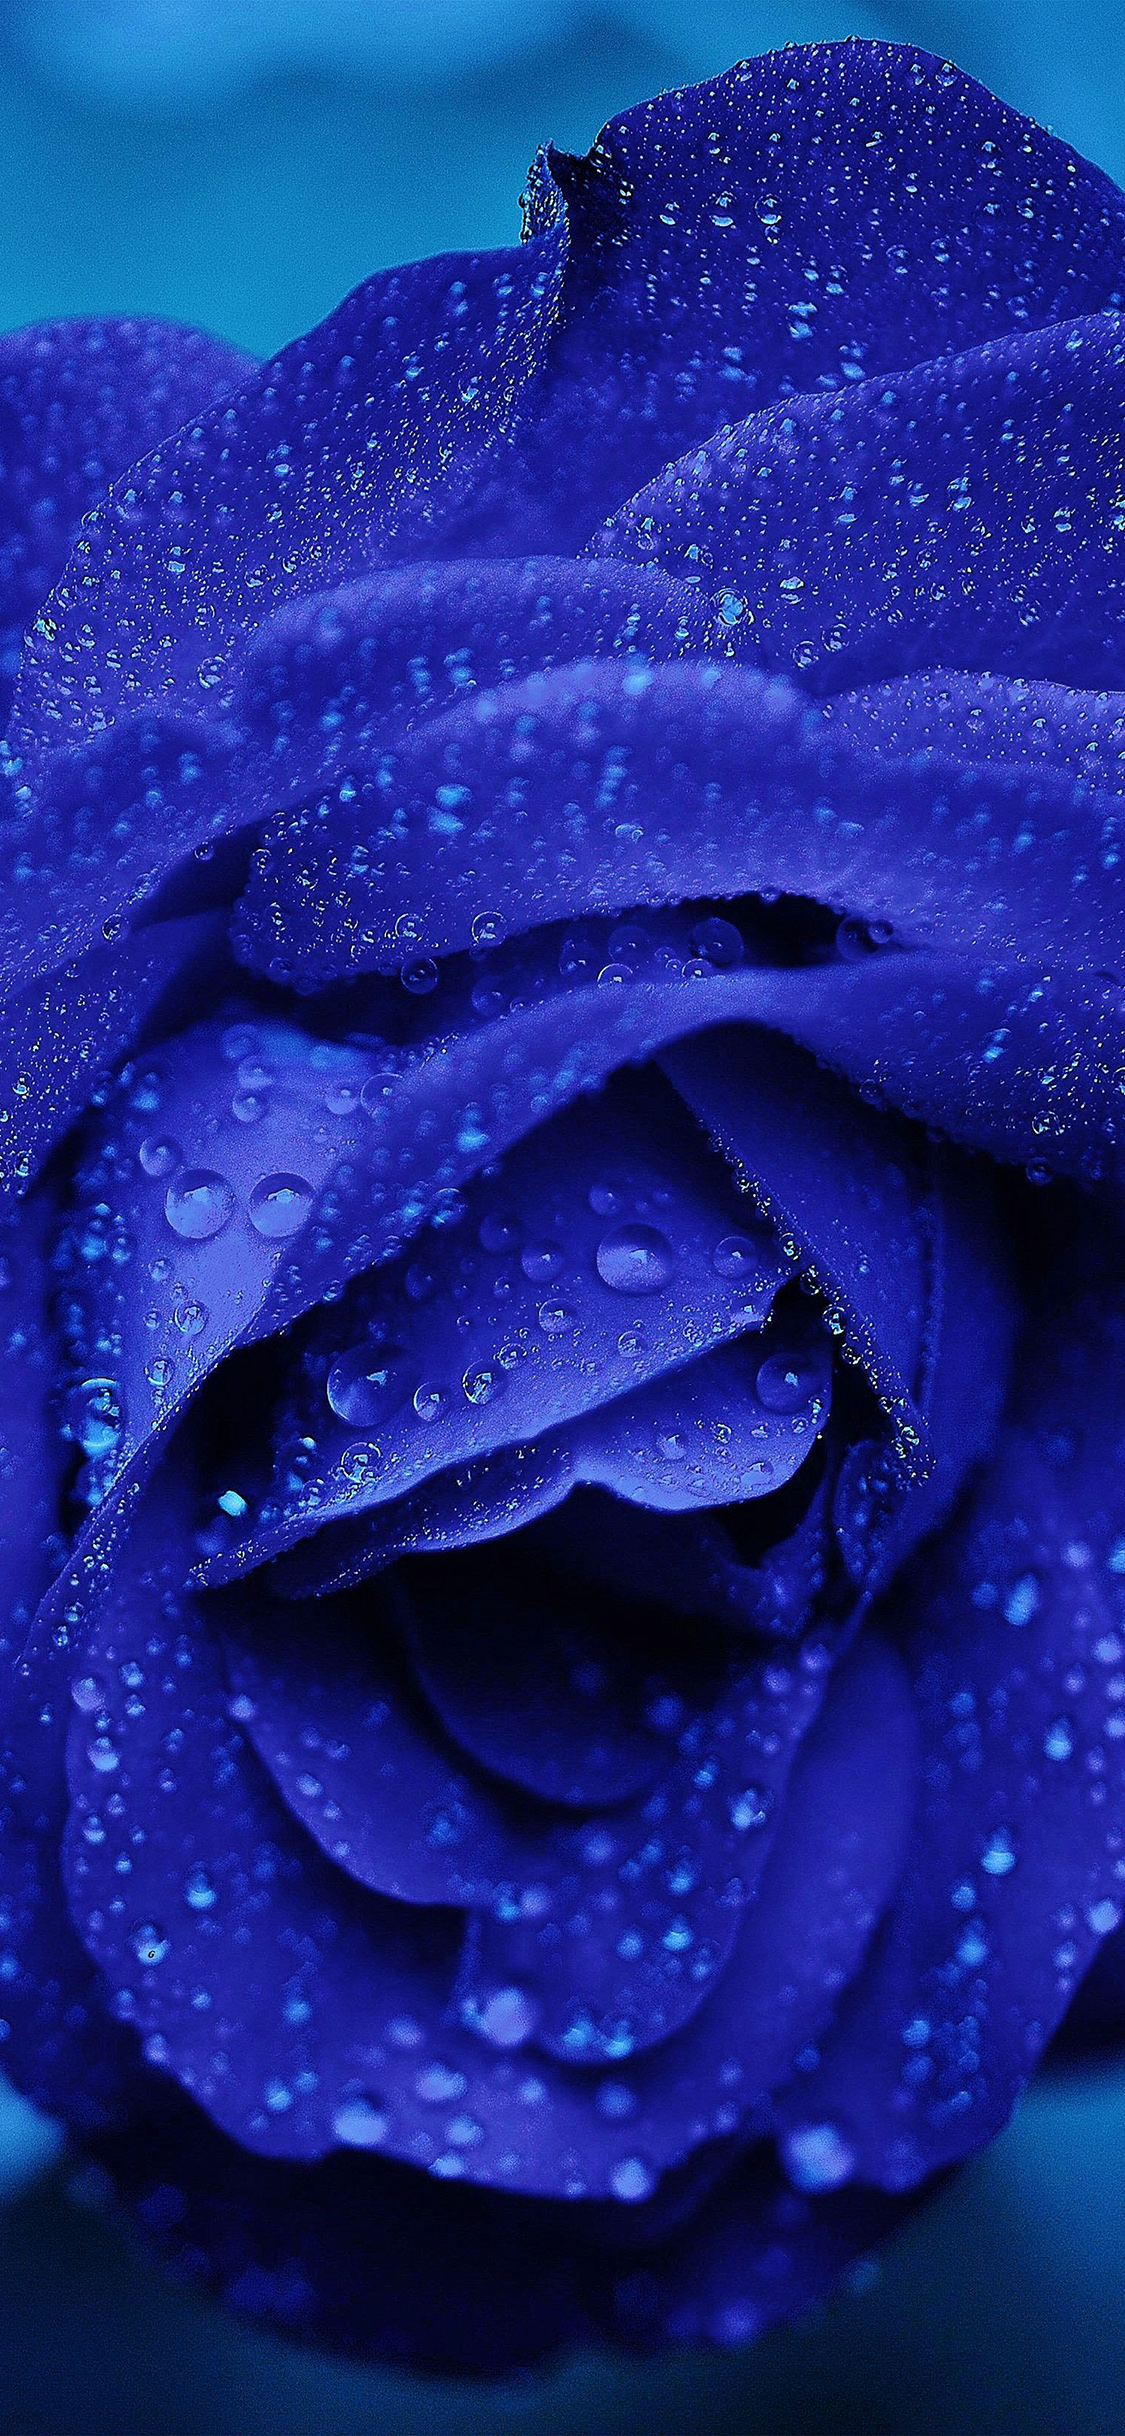 Flower Rain Images  Free Download on Freepik